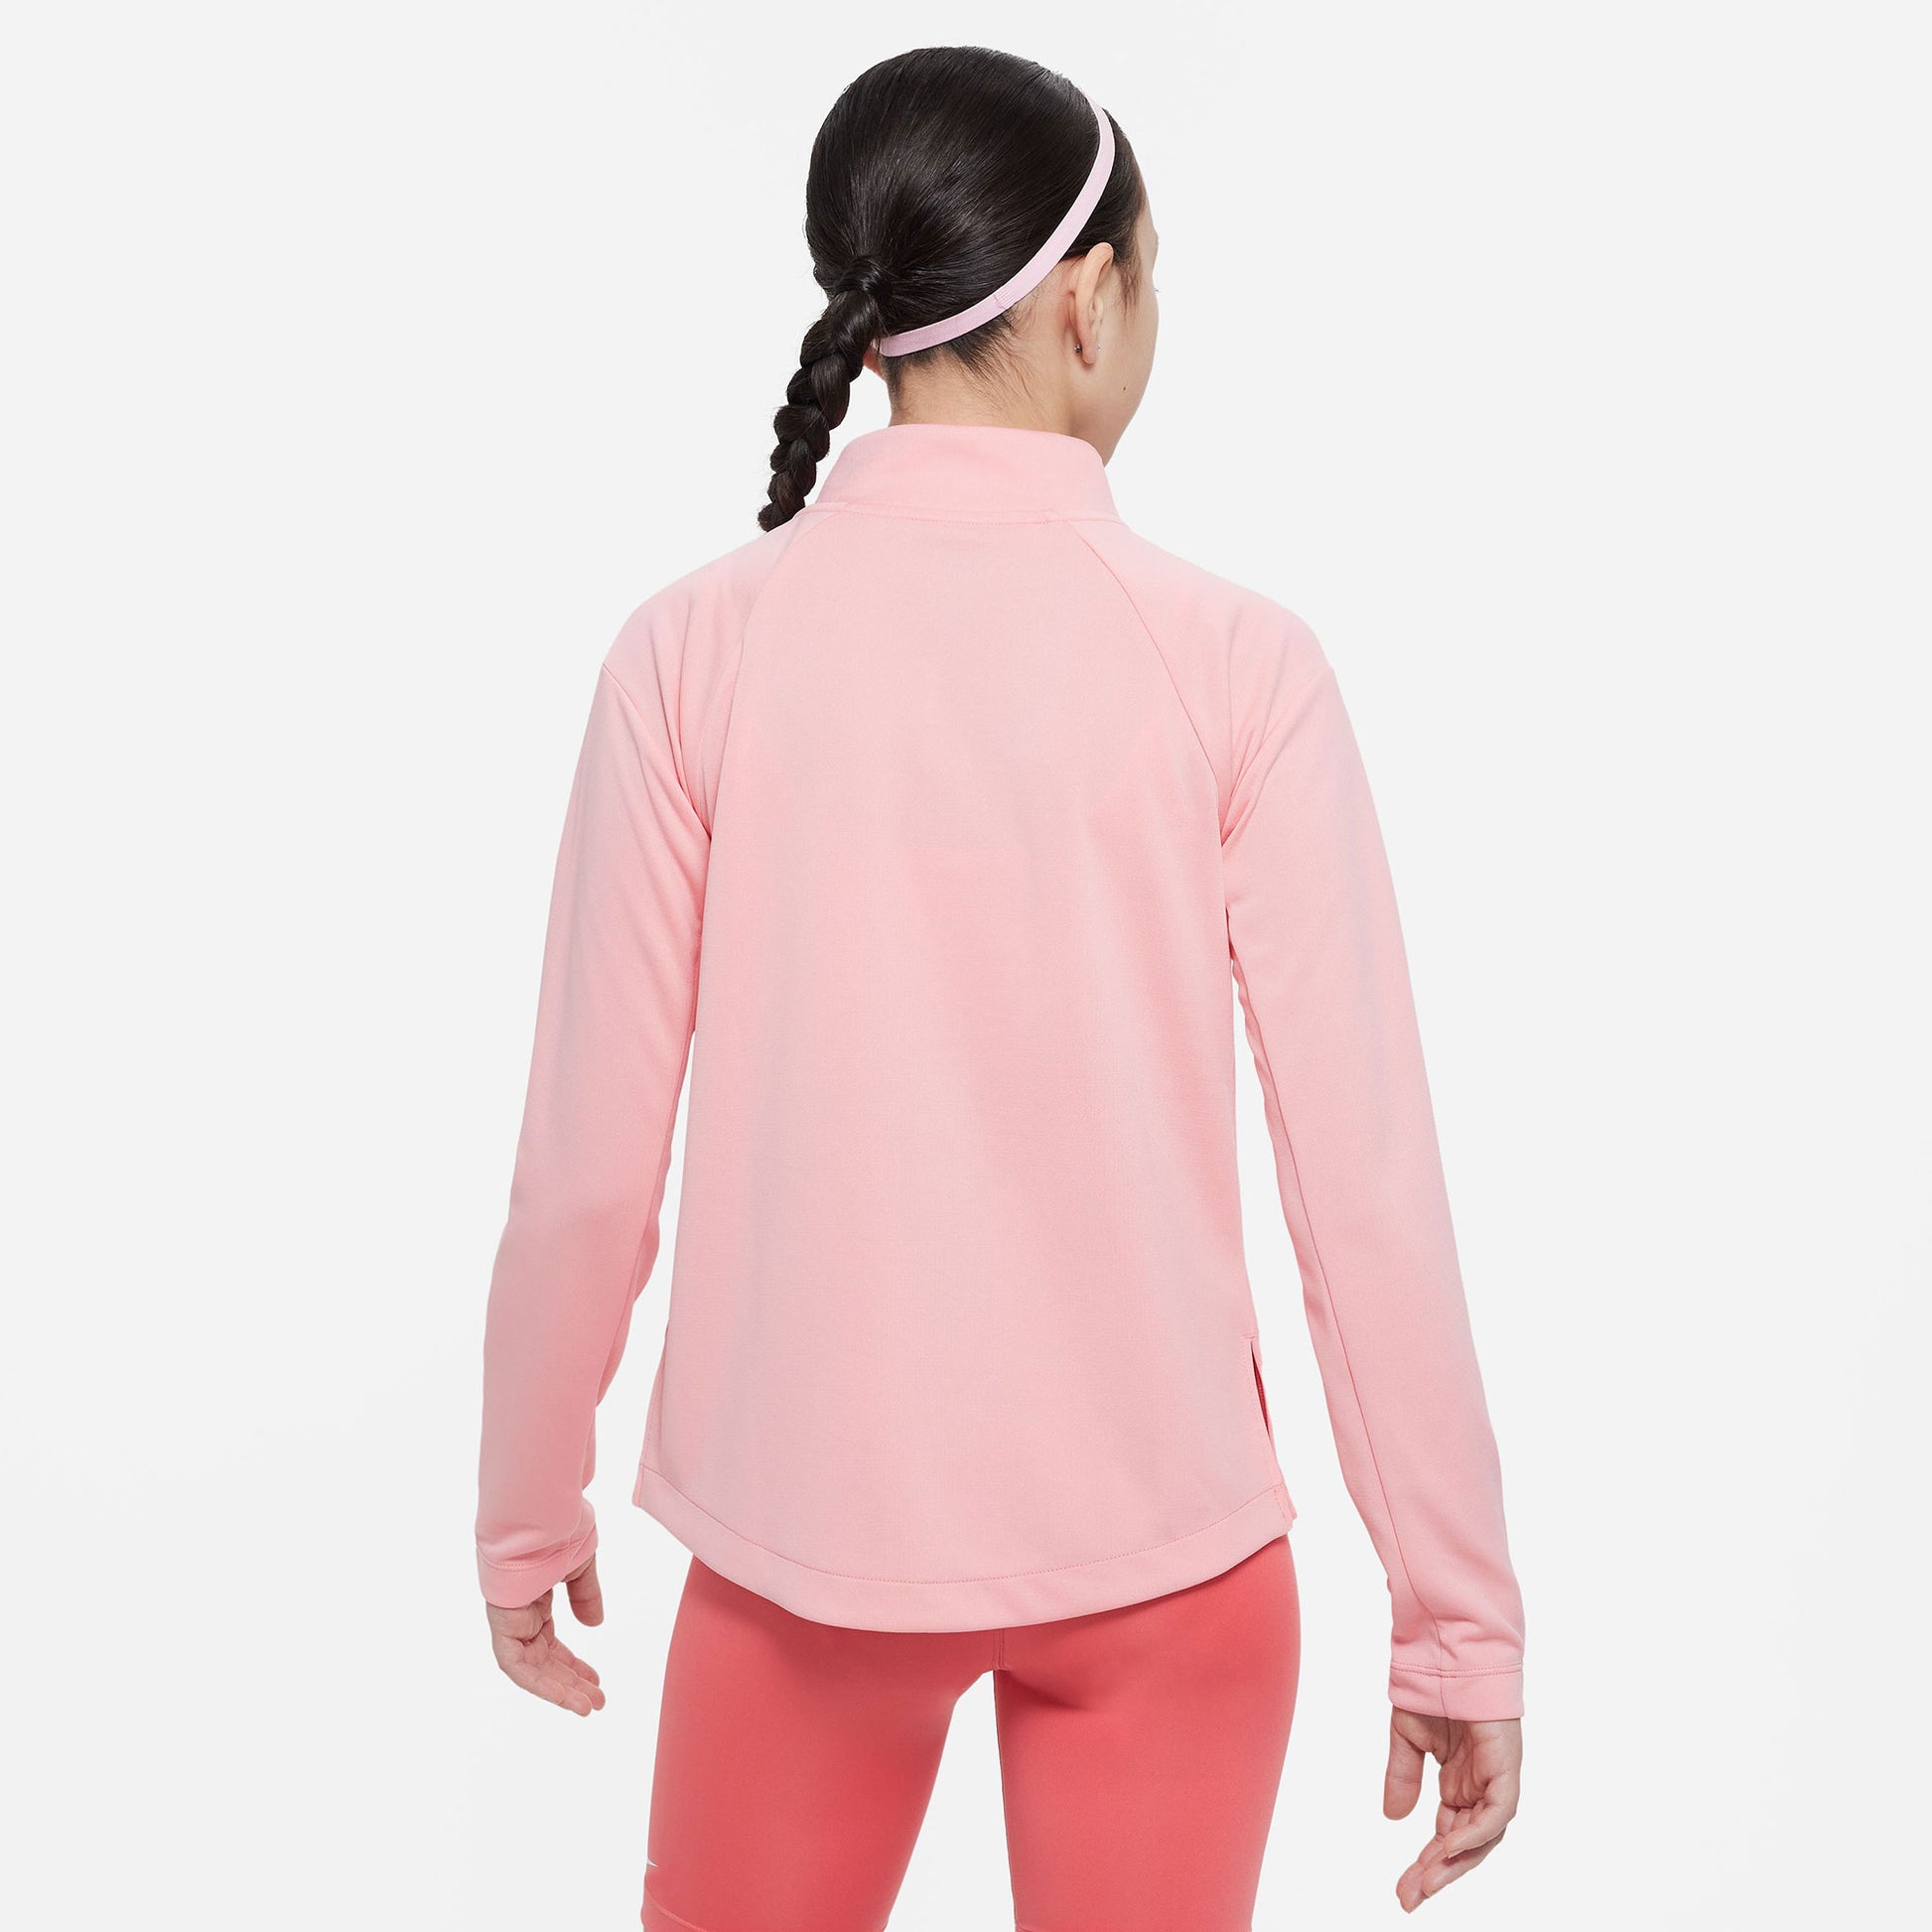 Nike Dri-FIT Girls' Long-Sleeve Top Pink (2)